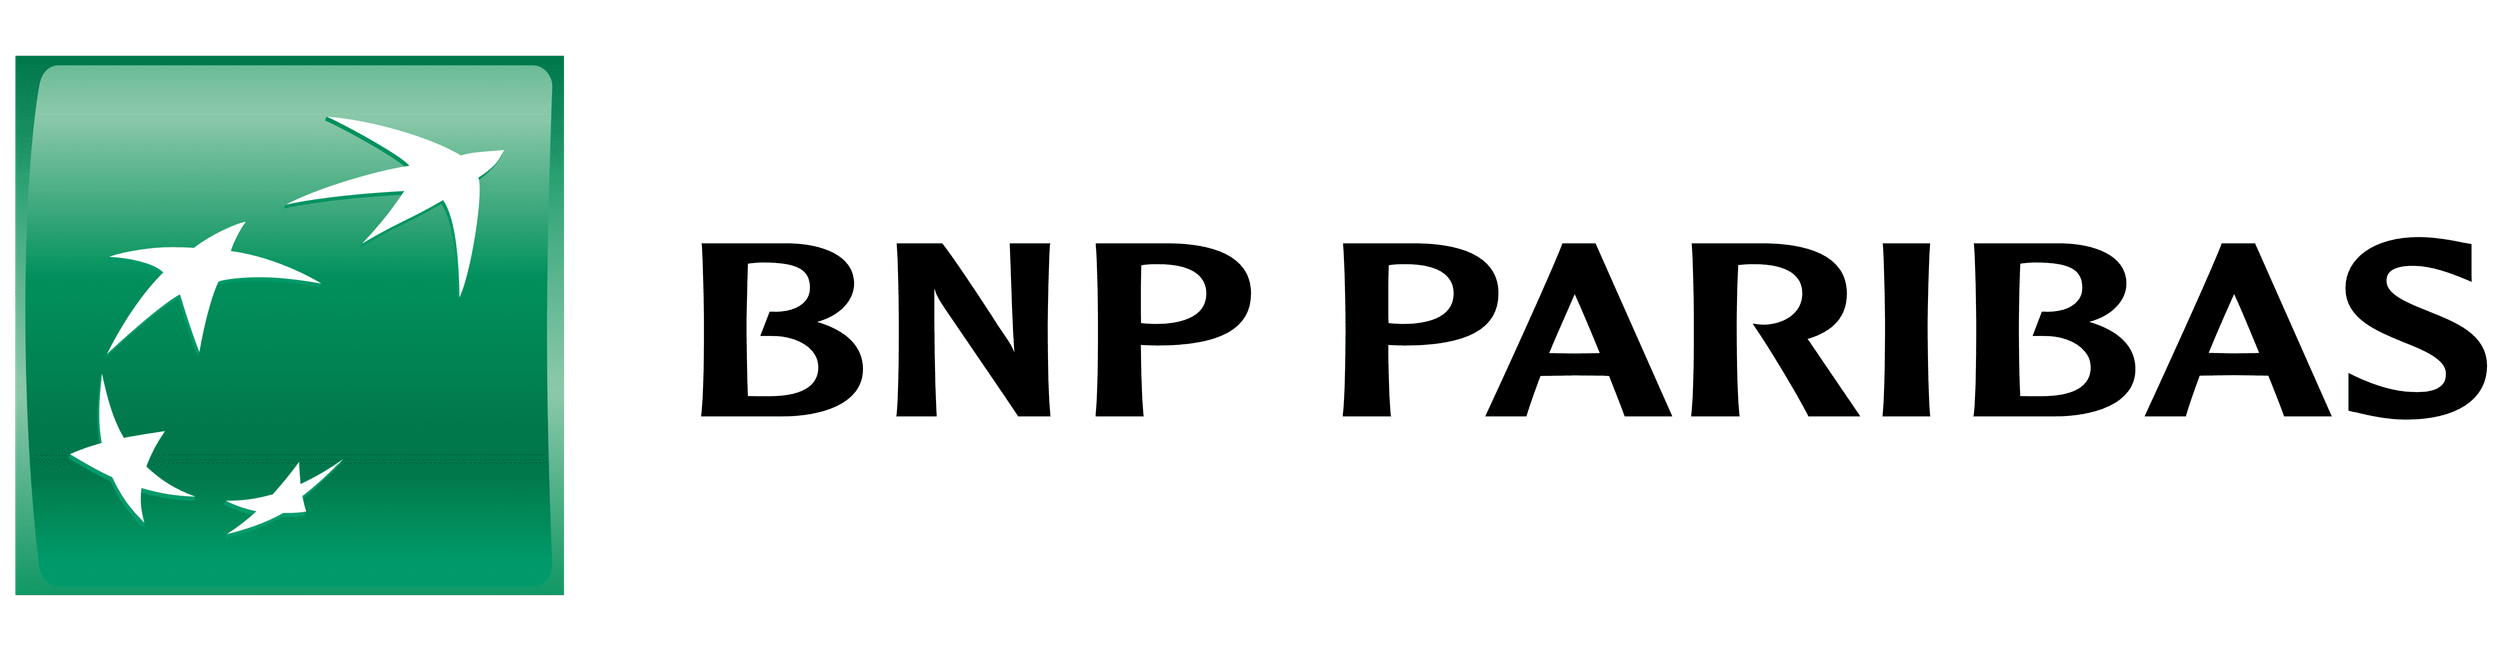 BNP-Paribas-logo.png